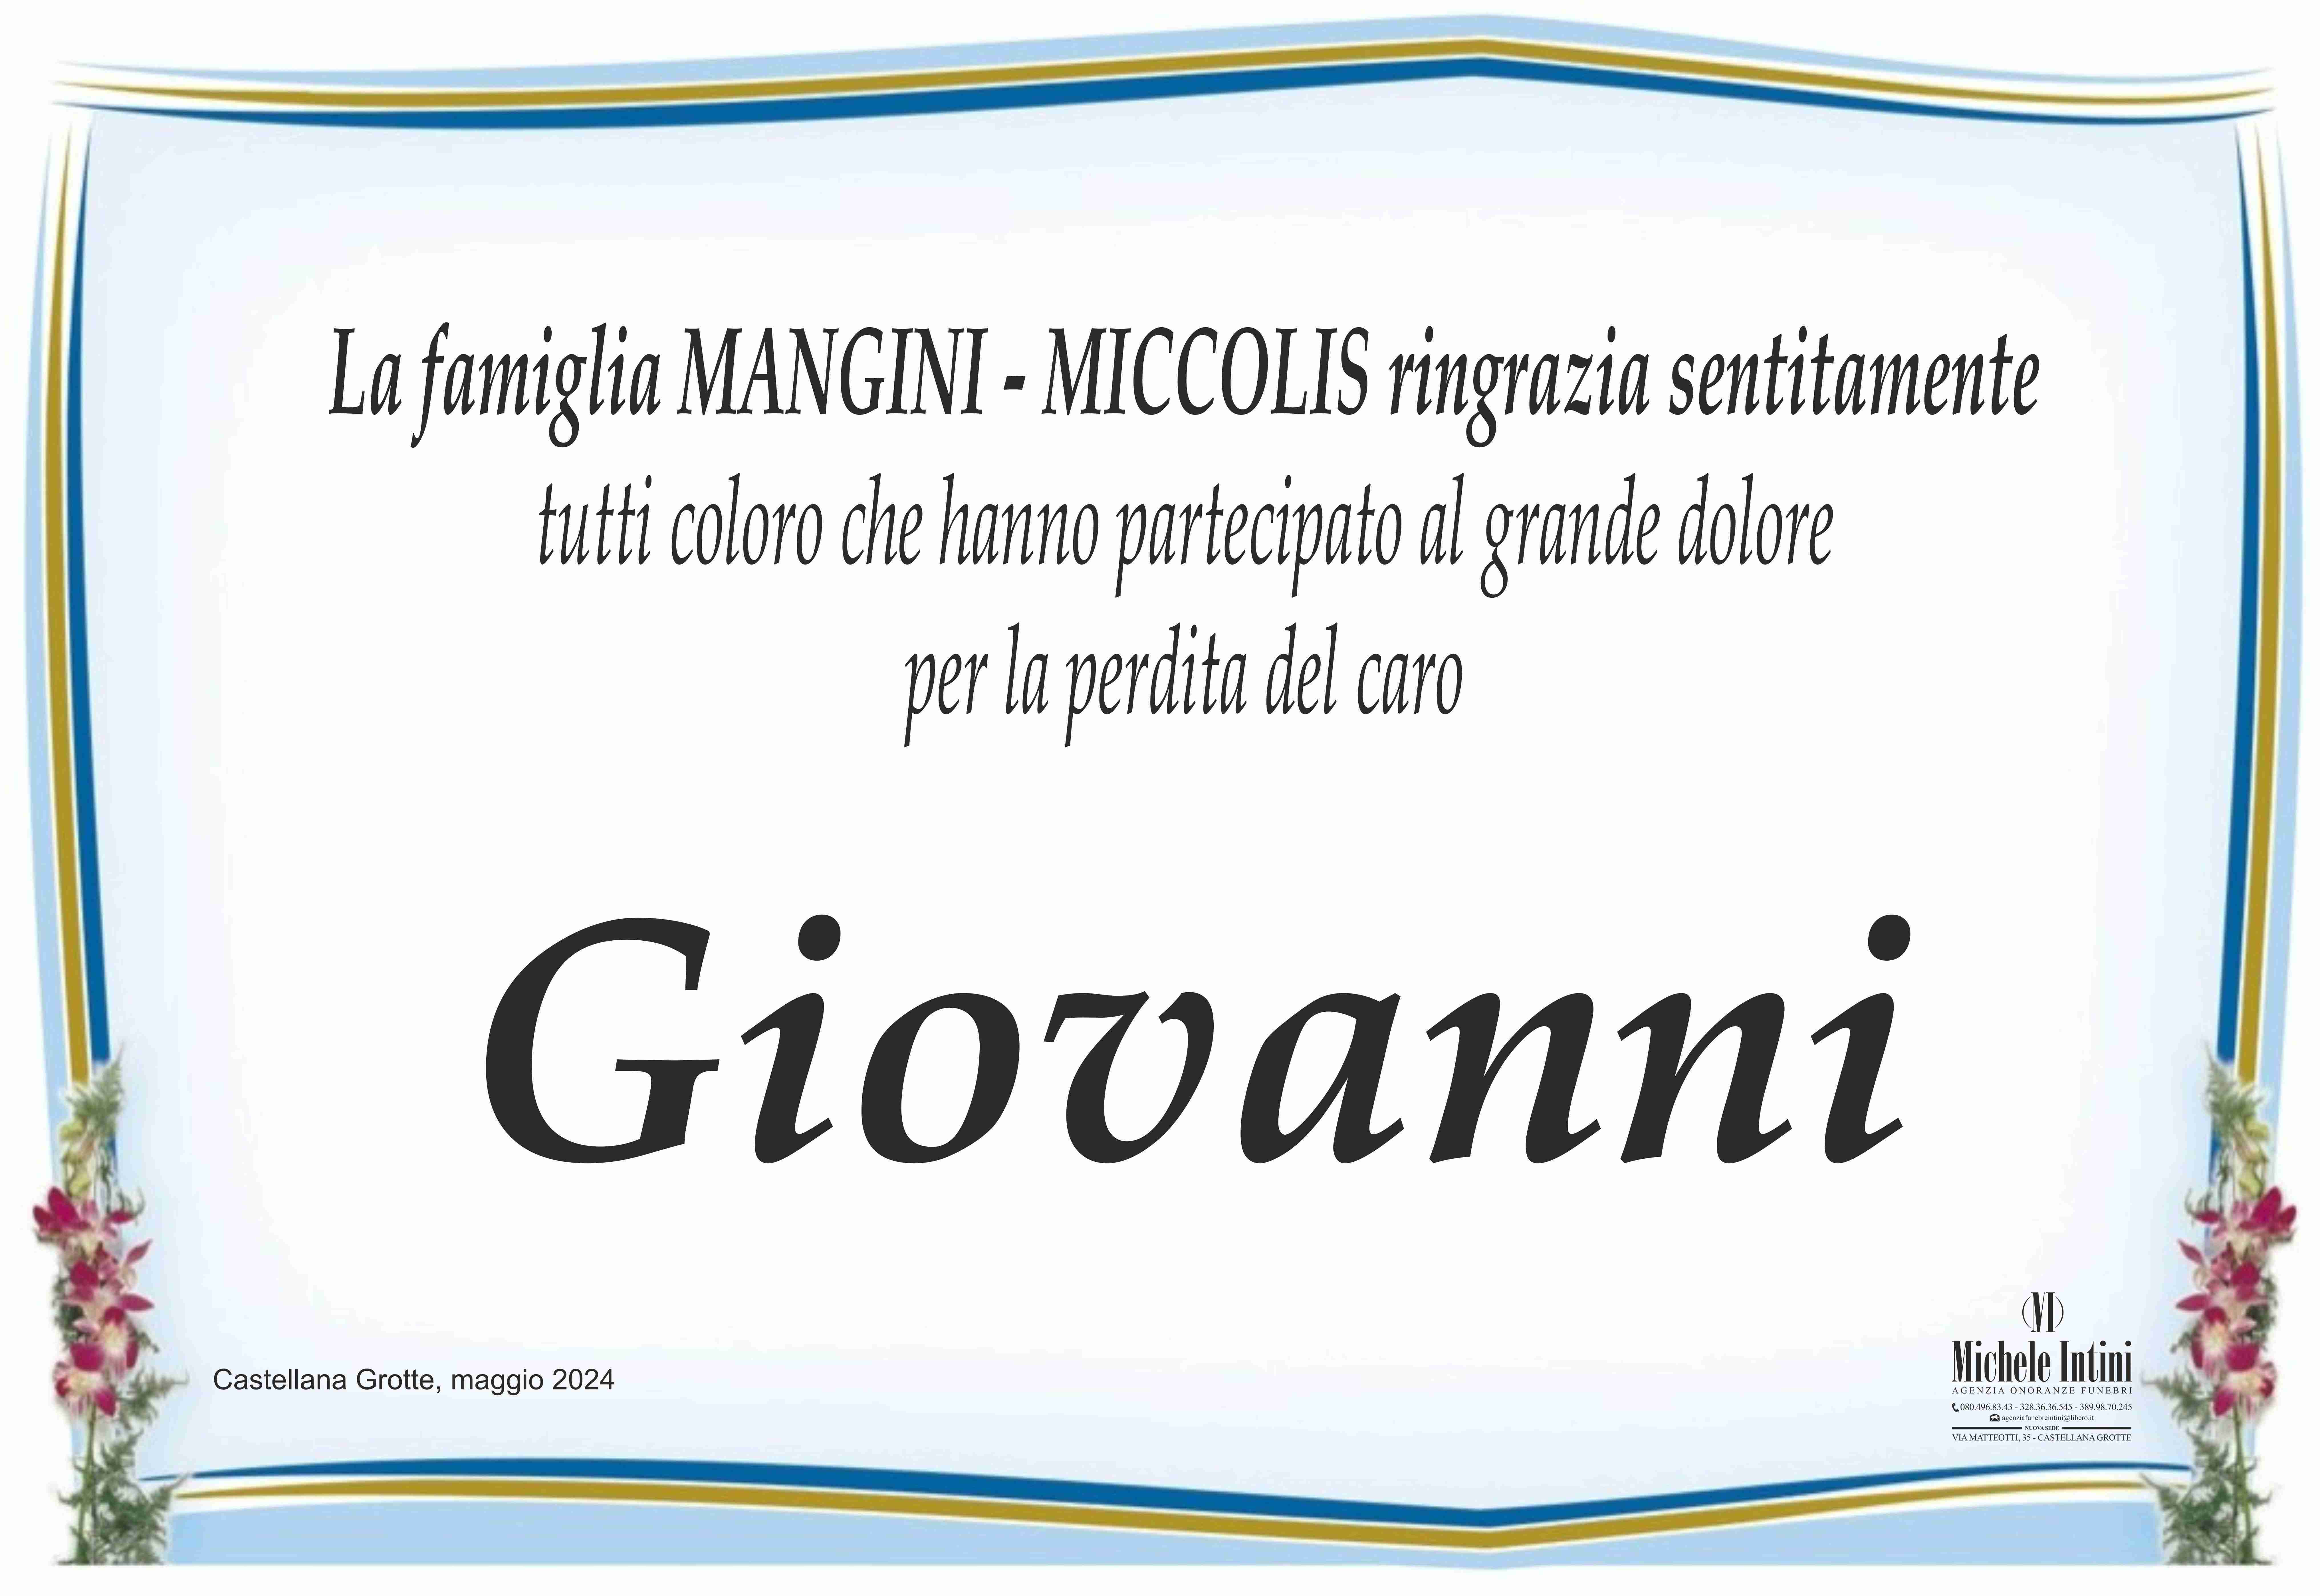 Giovanni Mangini